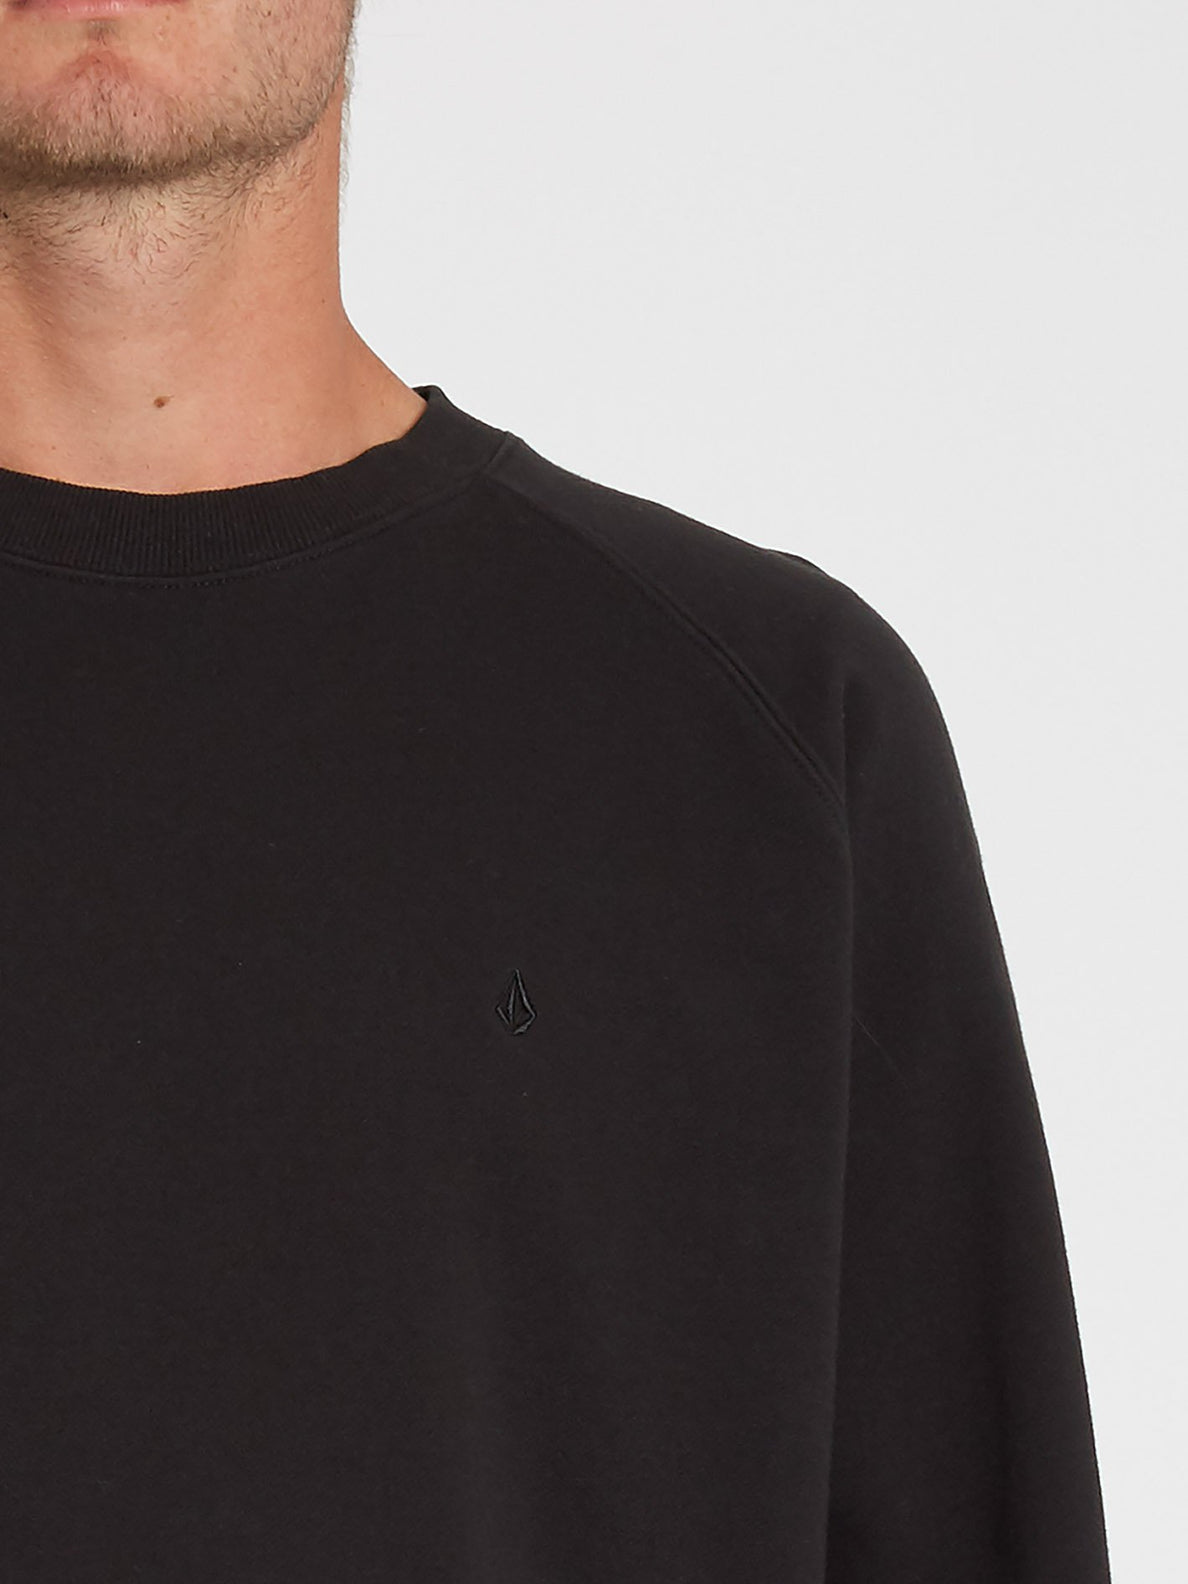 Freeleven Sweatshirt - Black (A4612101_BLK) [2]